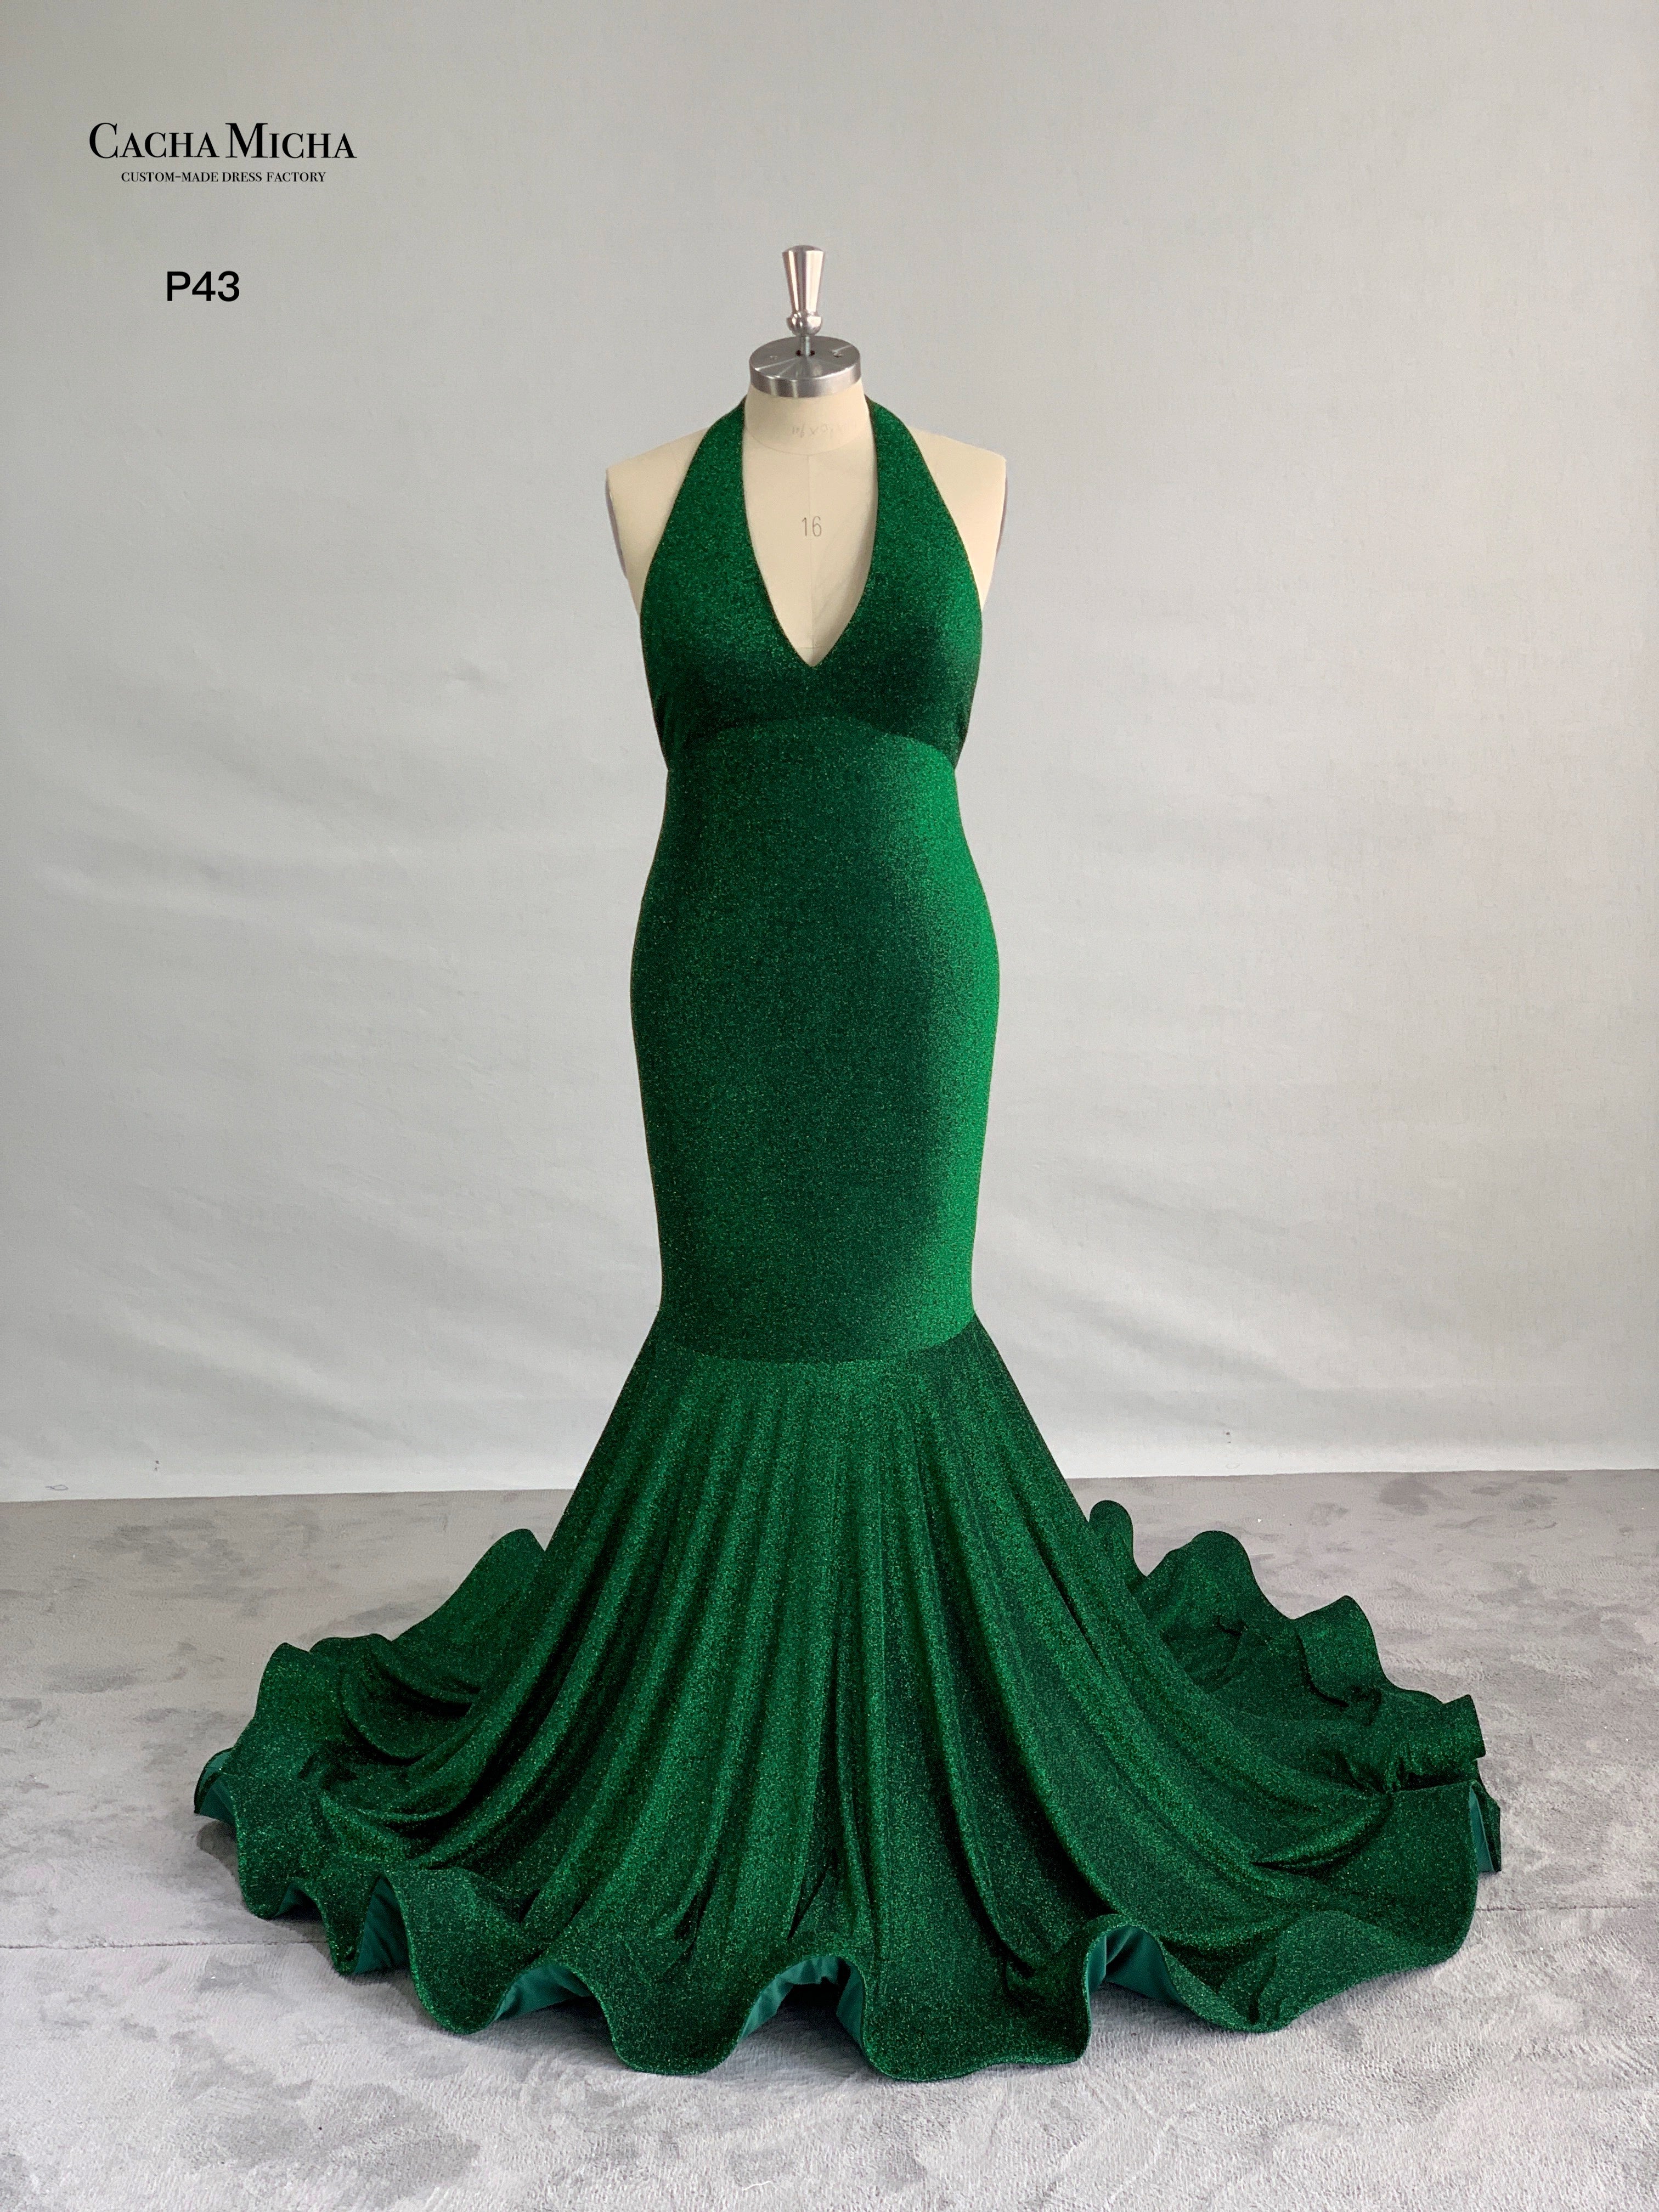 Halter Neck Backless Green Mermaid Prom Dress P43